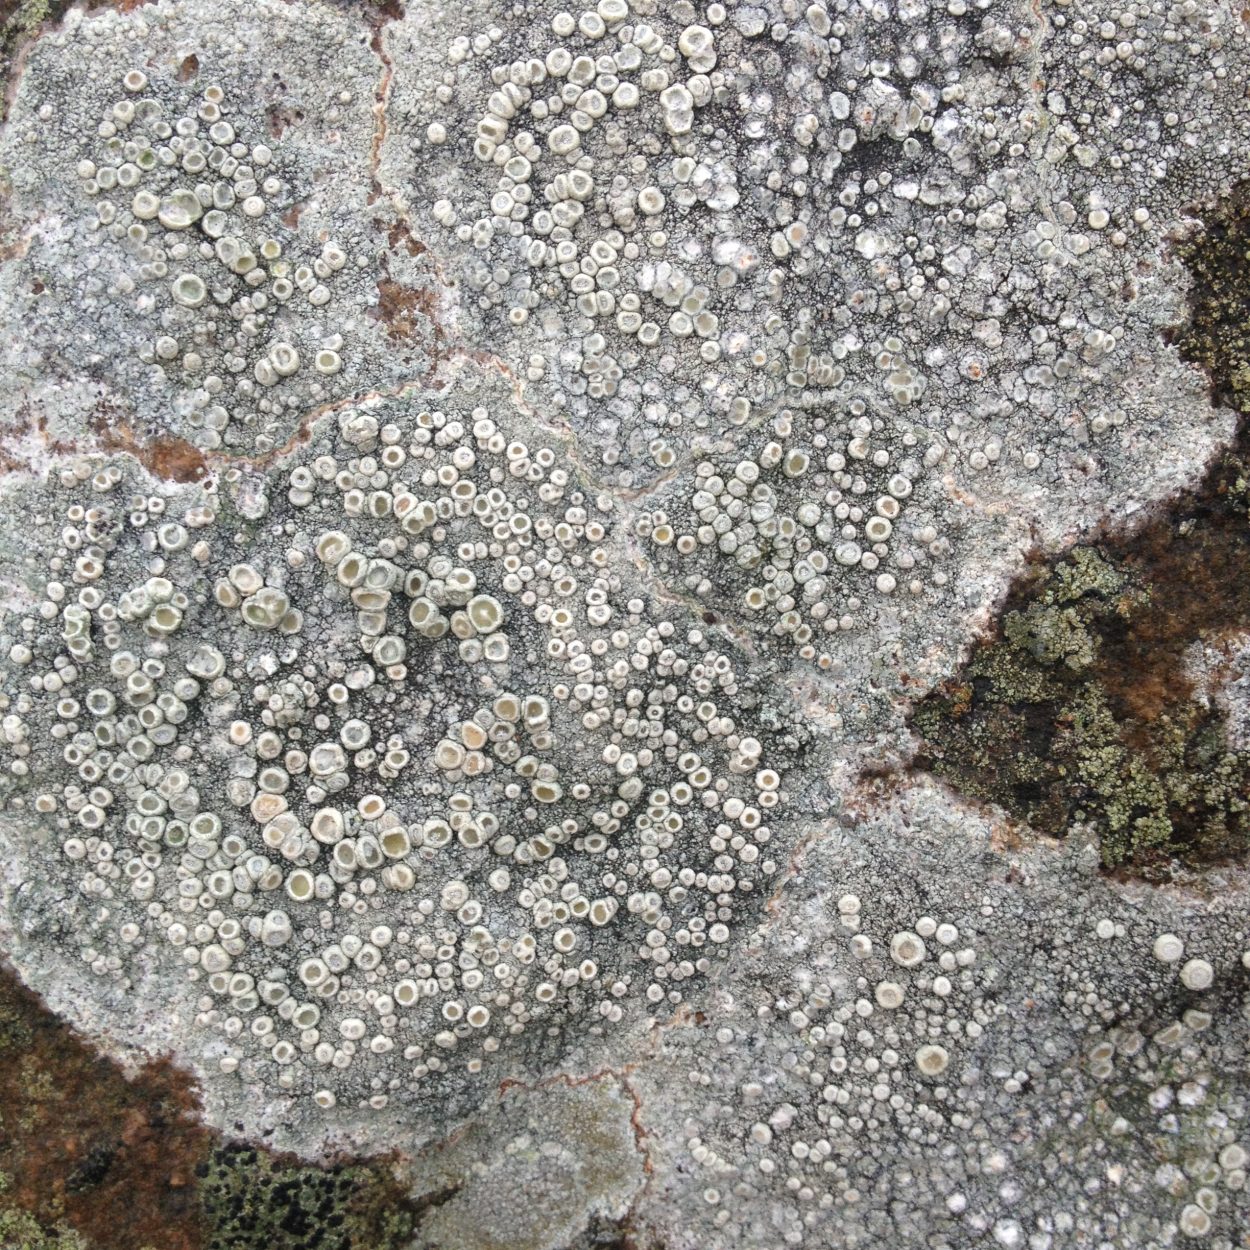 Moss on Scottish rocks